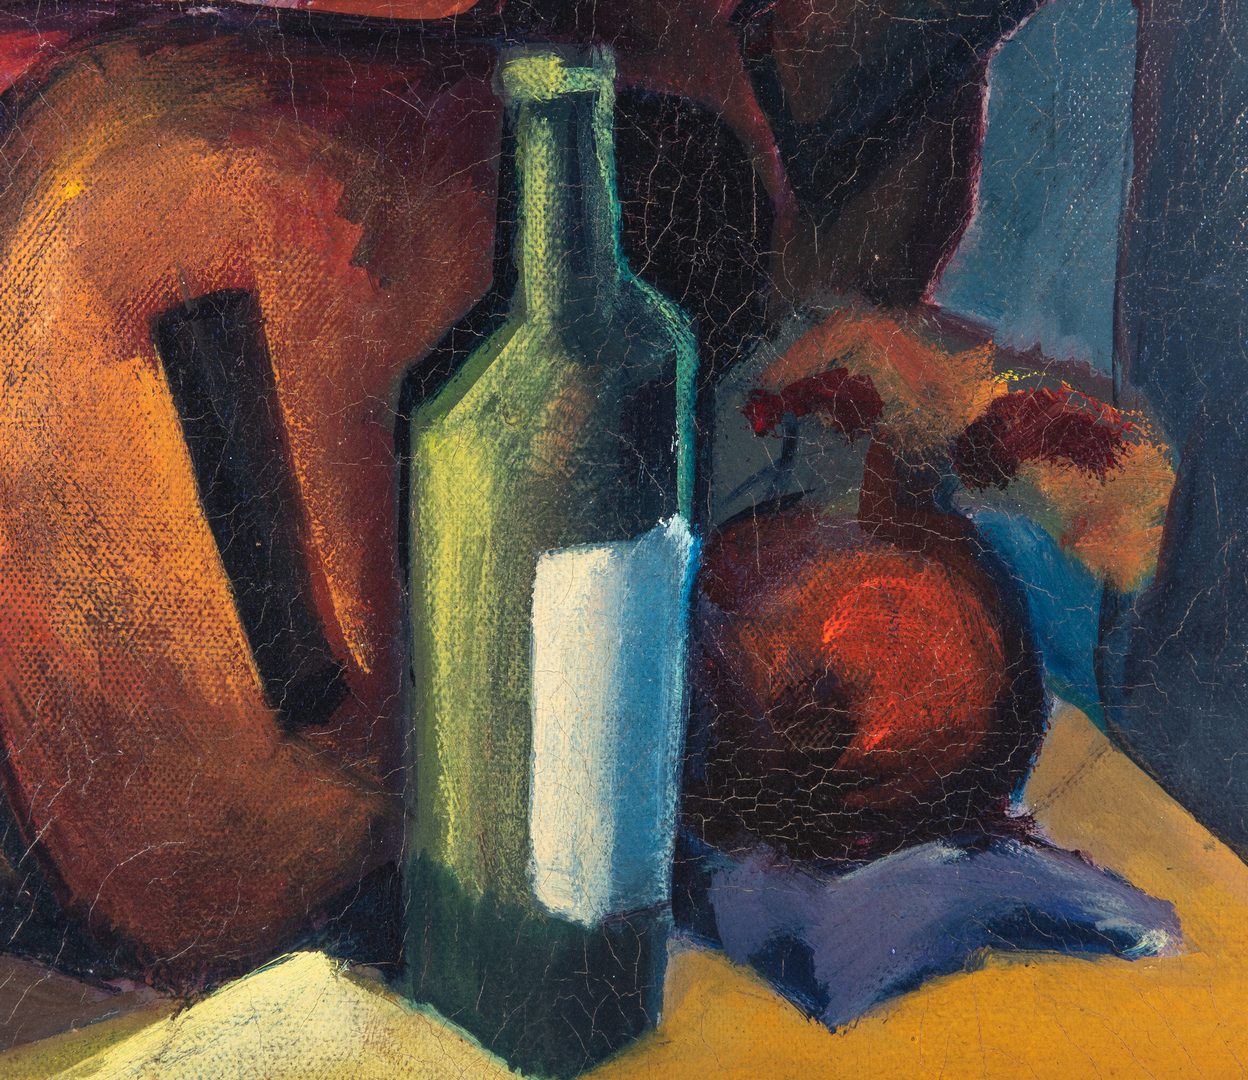 Lot 243: Attr. Karl Hermann Baumann, Cubist Still Life with Wine and Guitar